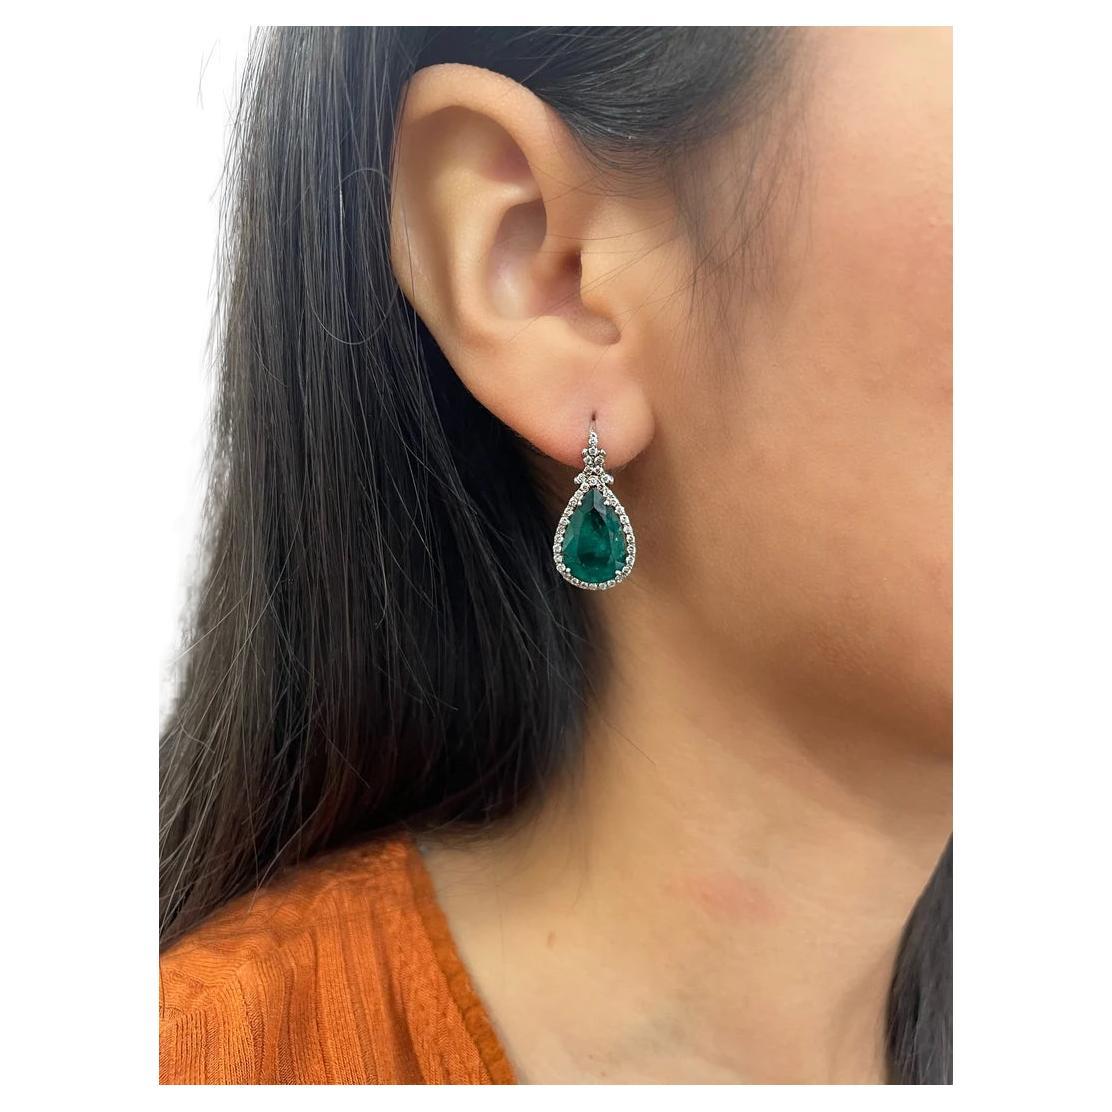 6.22 Ct Natural Pear Shape Emerald Earrings